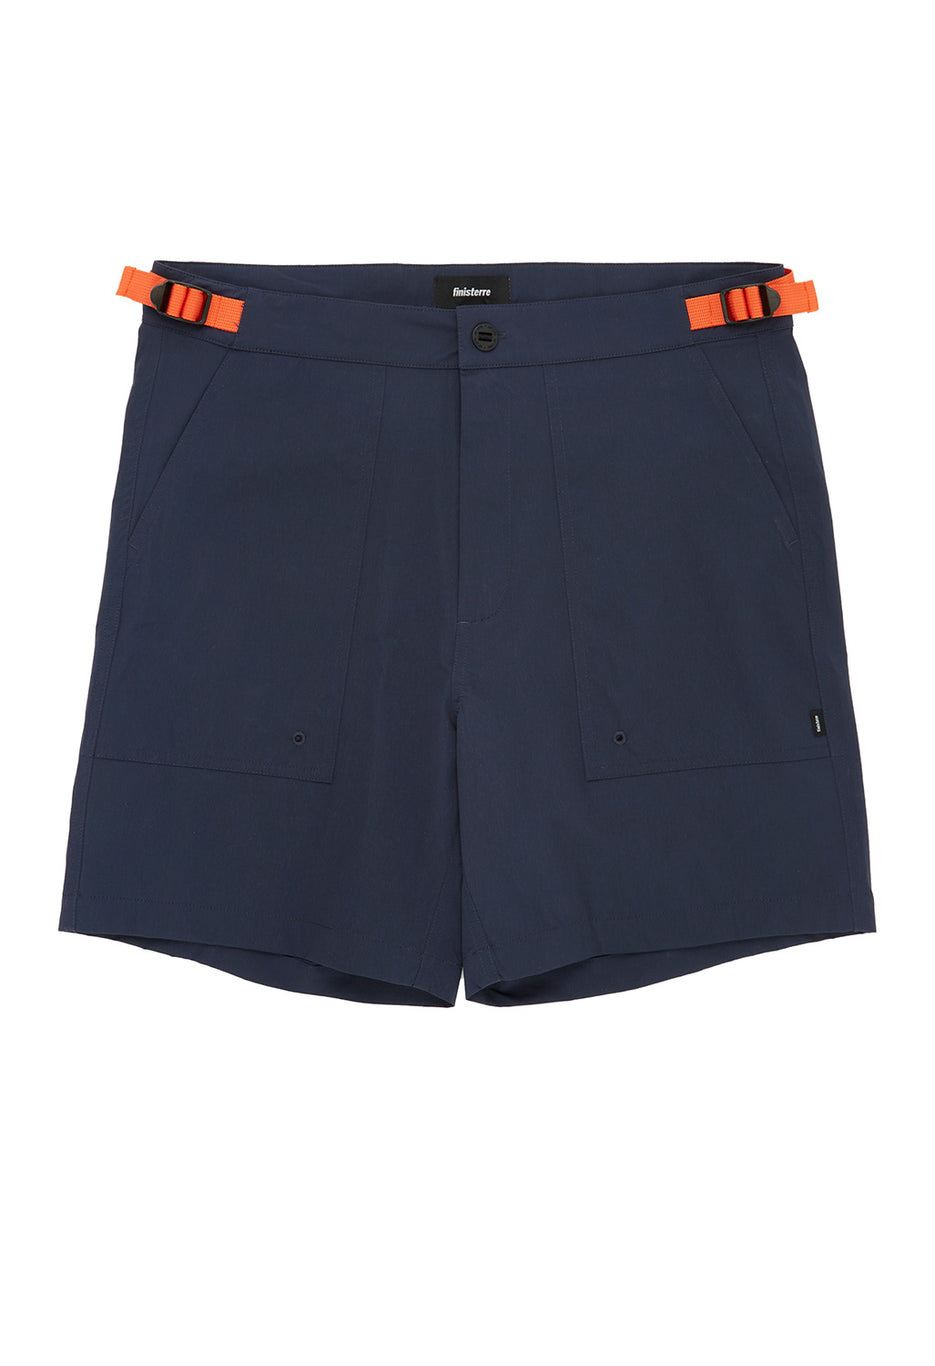 Finisterre Men's Walker Shorts - Navy